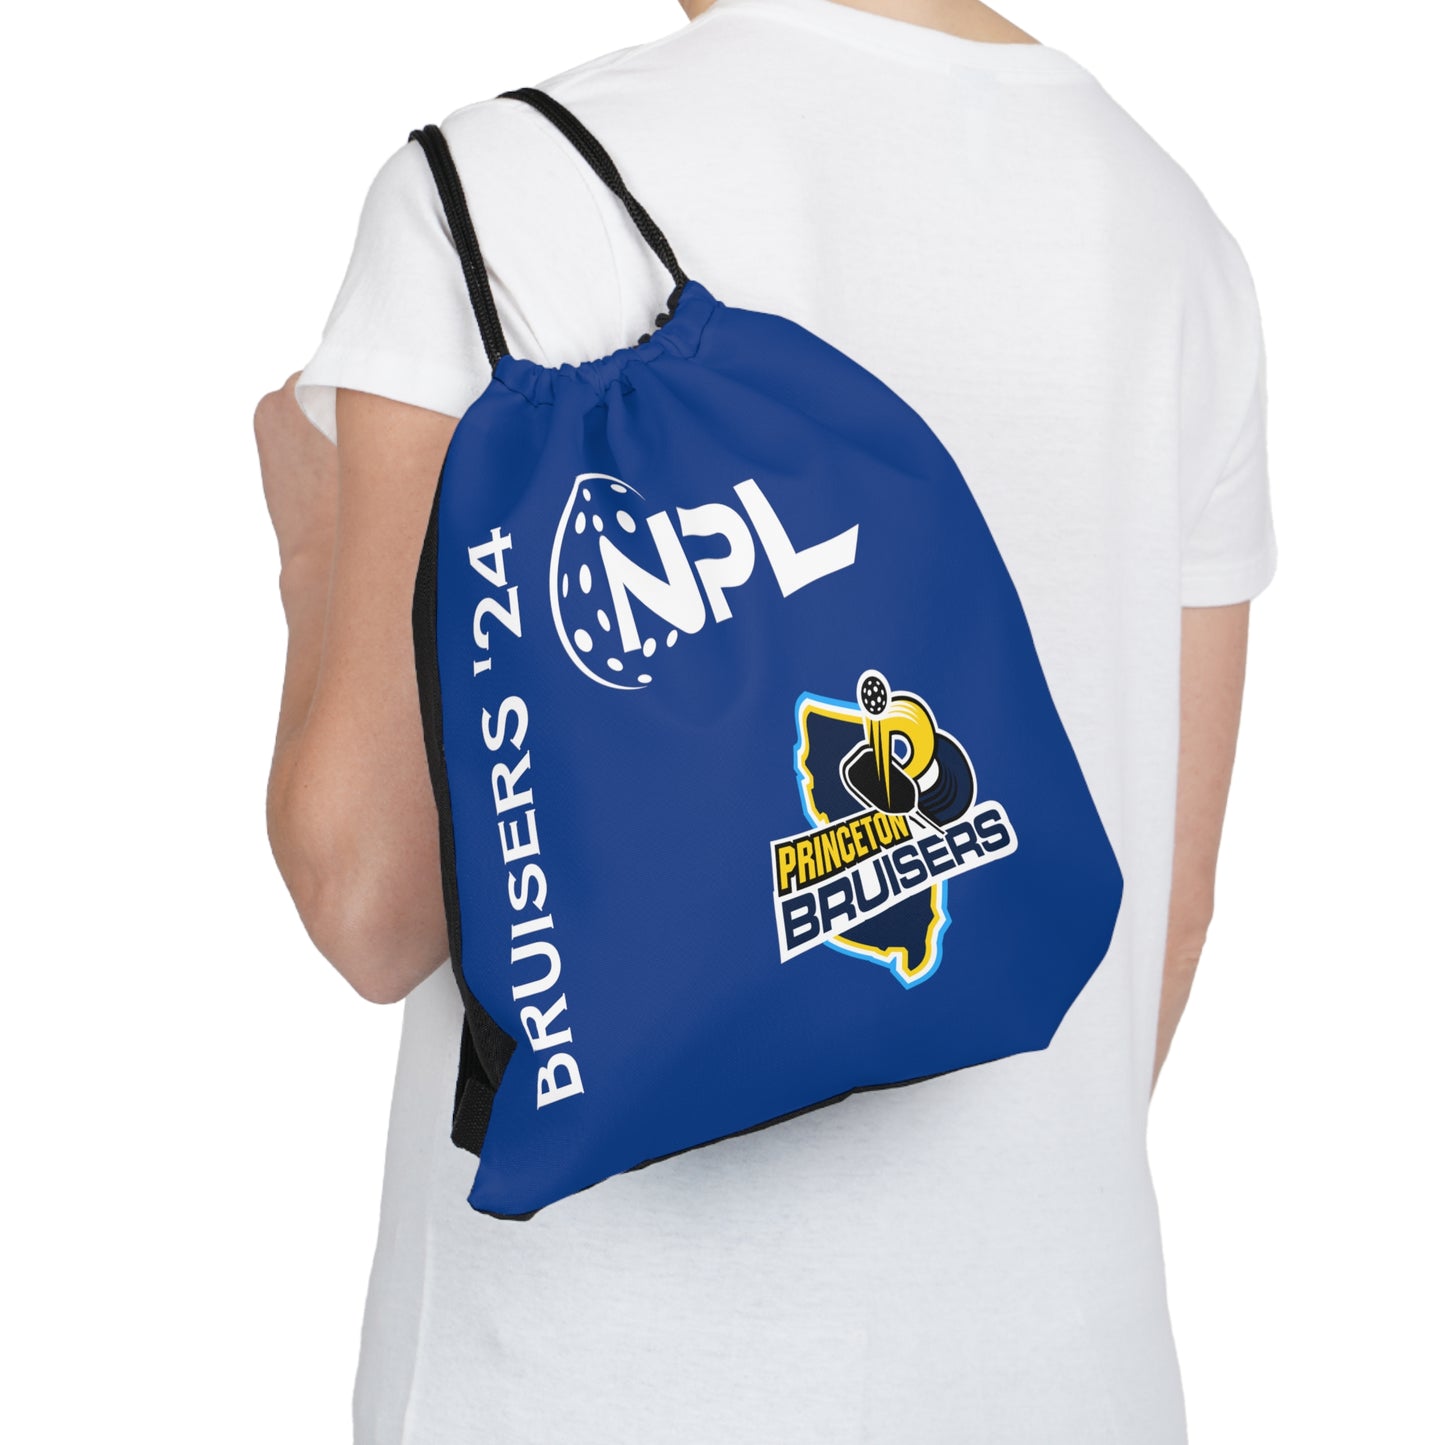 Princeton Bruisers Outdoor NPL Team - Sports Bag